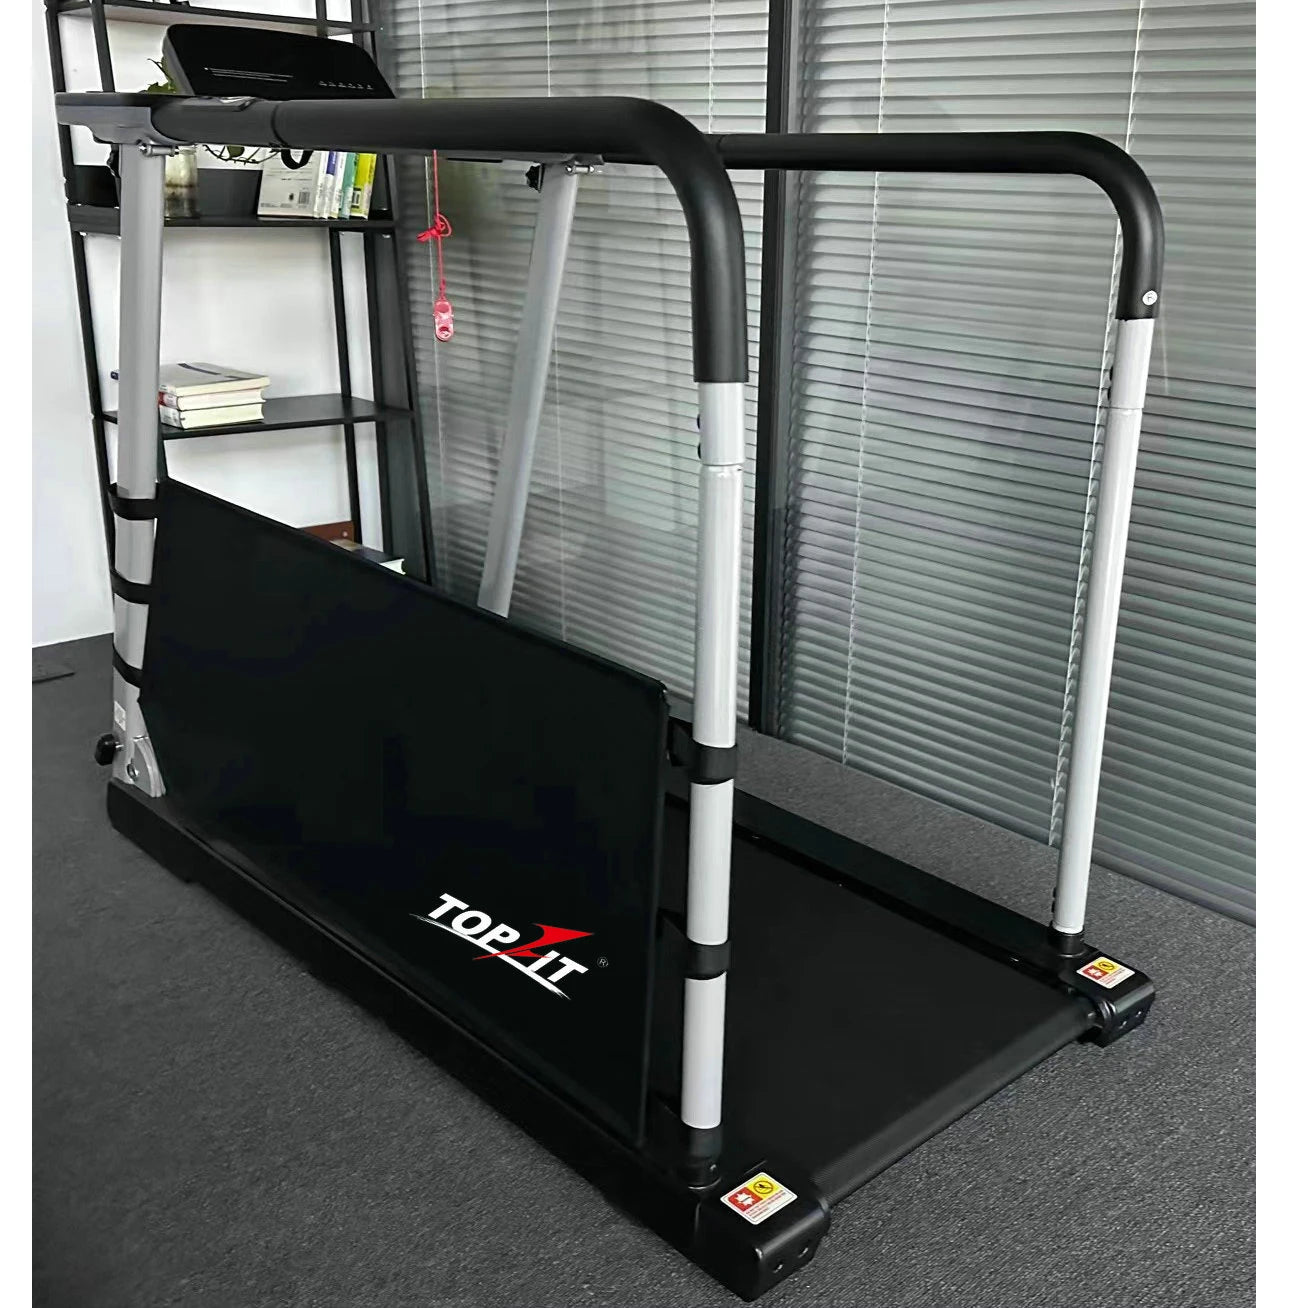 Rehabilitation Training Treadmill Medical Slow Walking machine dog treadmill for medical use